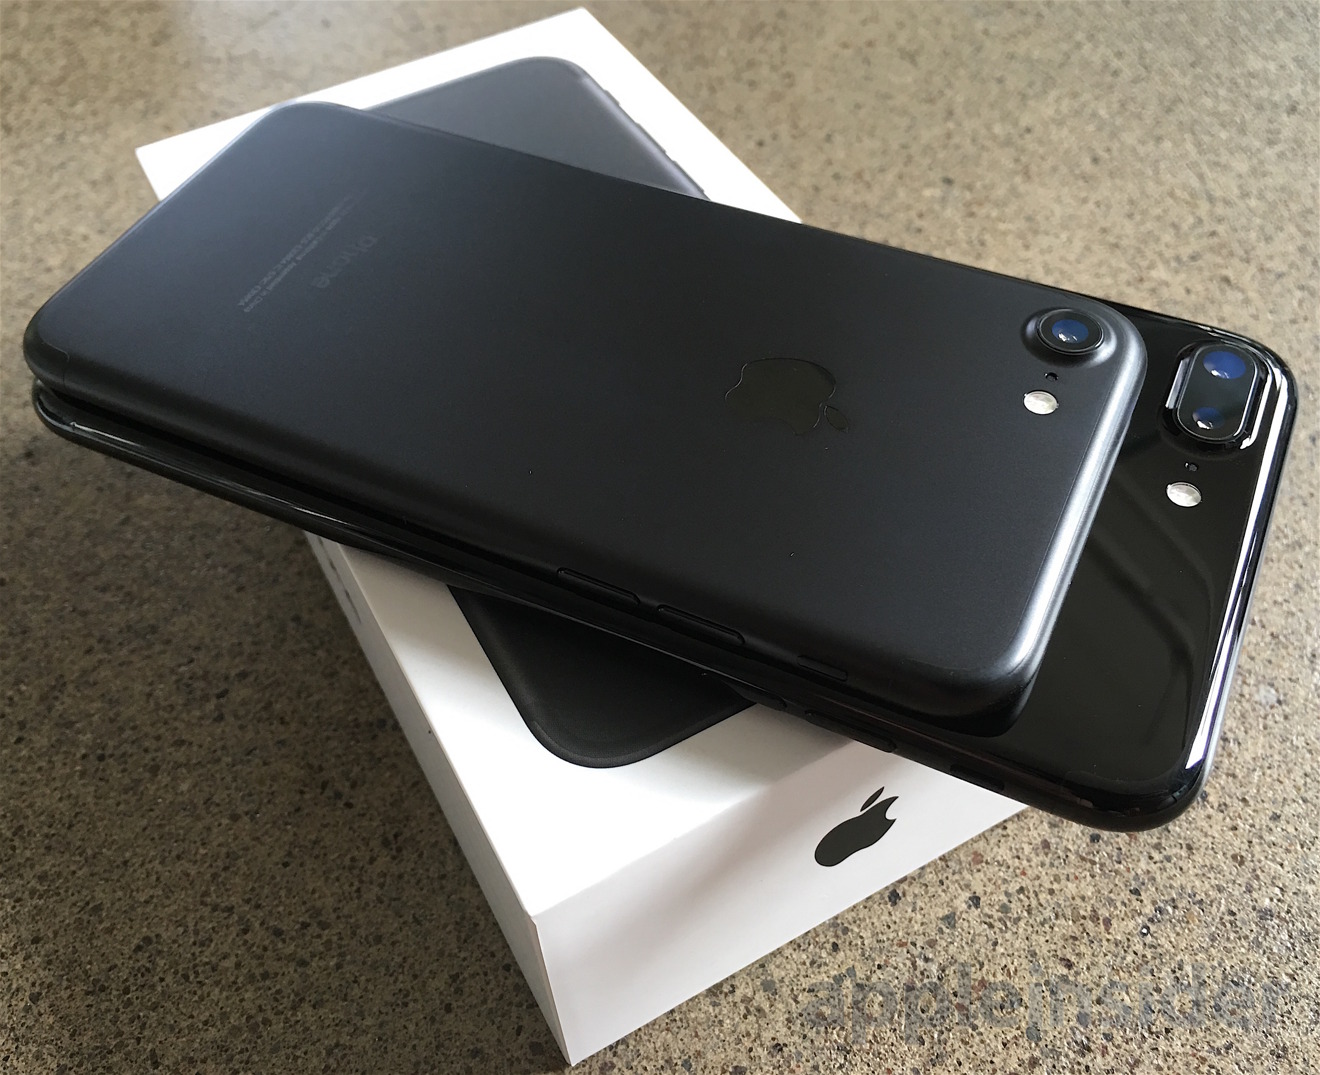 Verklaring gaan beslissen golf Black & Jet Black: Unboxing the new iPhone 7, iPhone 7 Plus with Lightning  headphones | AppleInsider